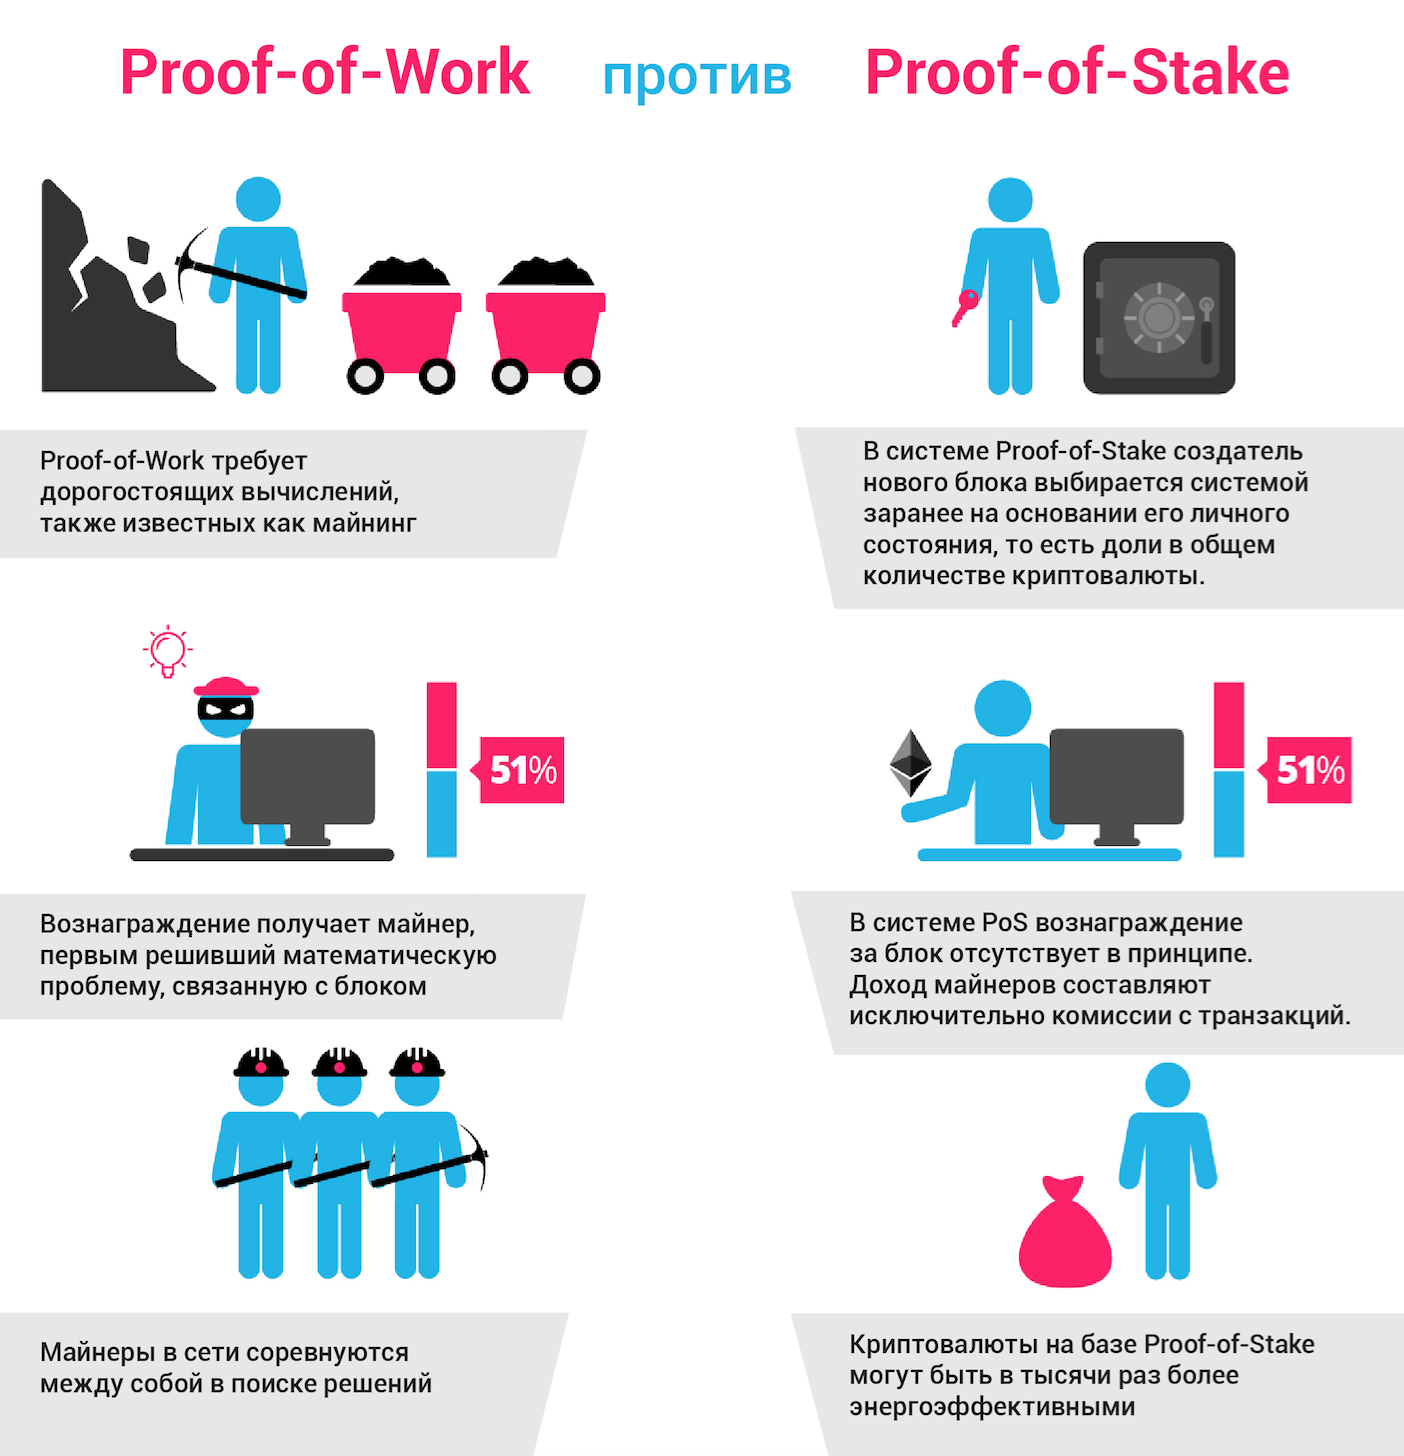 Что такое Proof-of-Work и Proof-of-Stake?